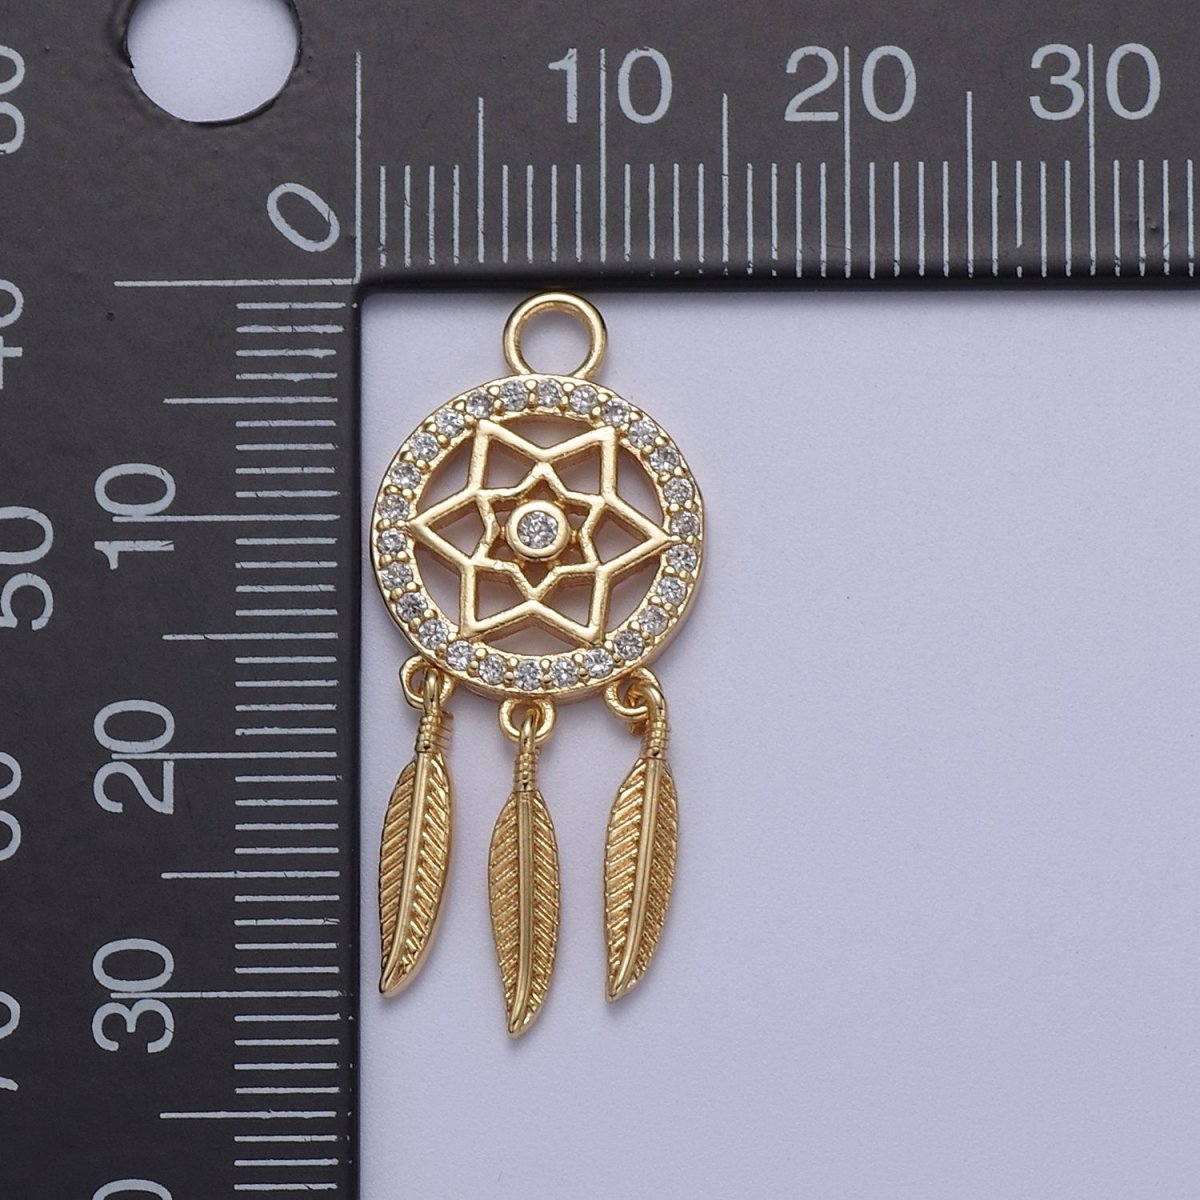 18k Gold Filled Dainty Dream Catcher Charm Bracelet Necklace Pendant Boho Charm for Jewelry Making Bohemian Inspired C-254 - DLUXCA